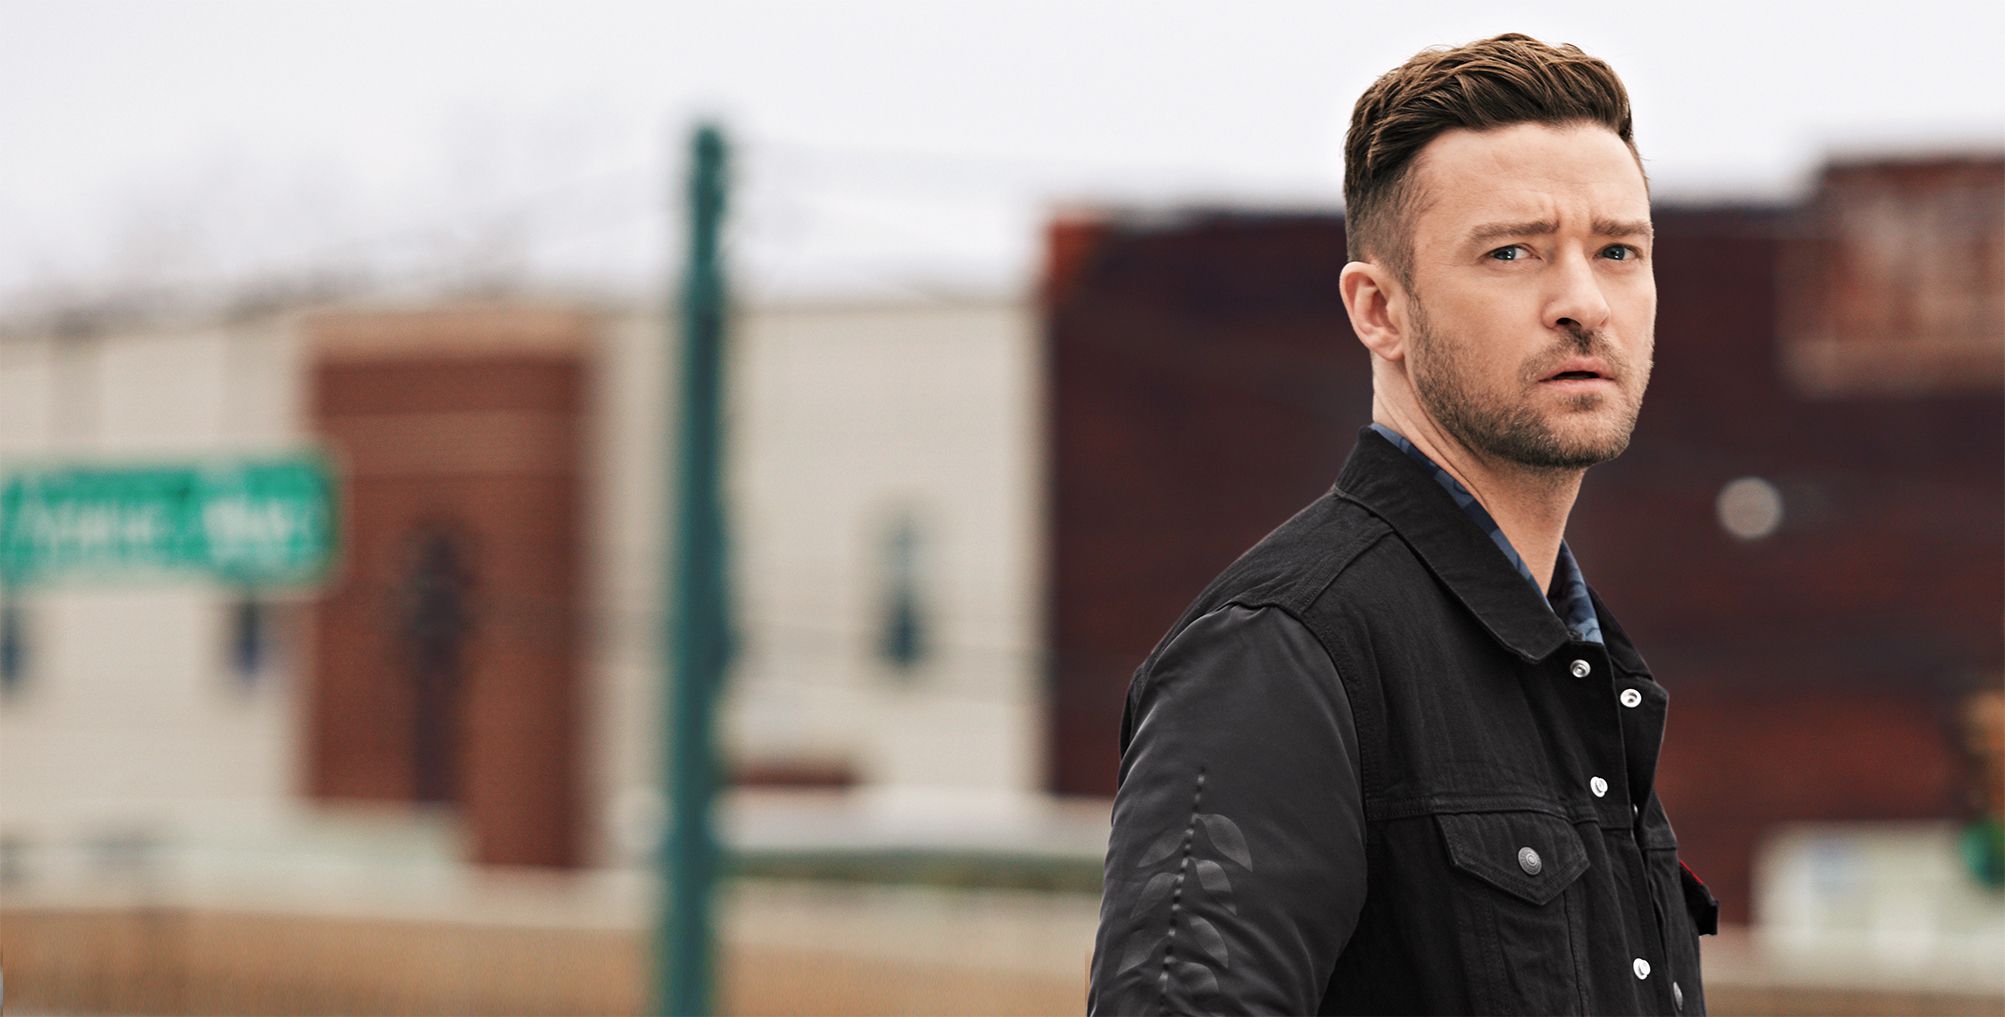 Levis Fresh Leaves Justin Timberlake Store, SAVE 53%.